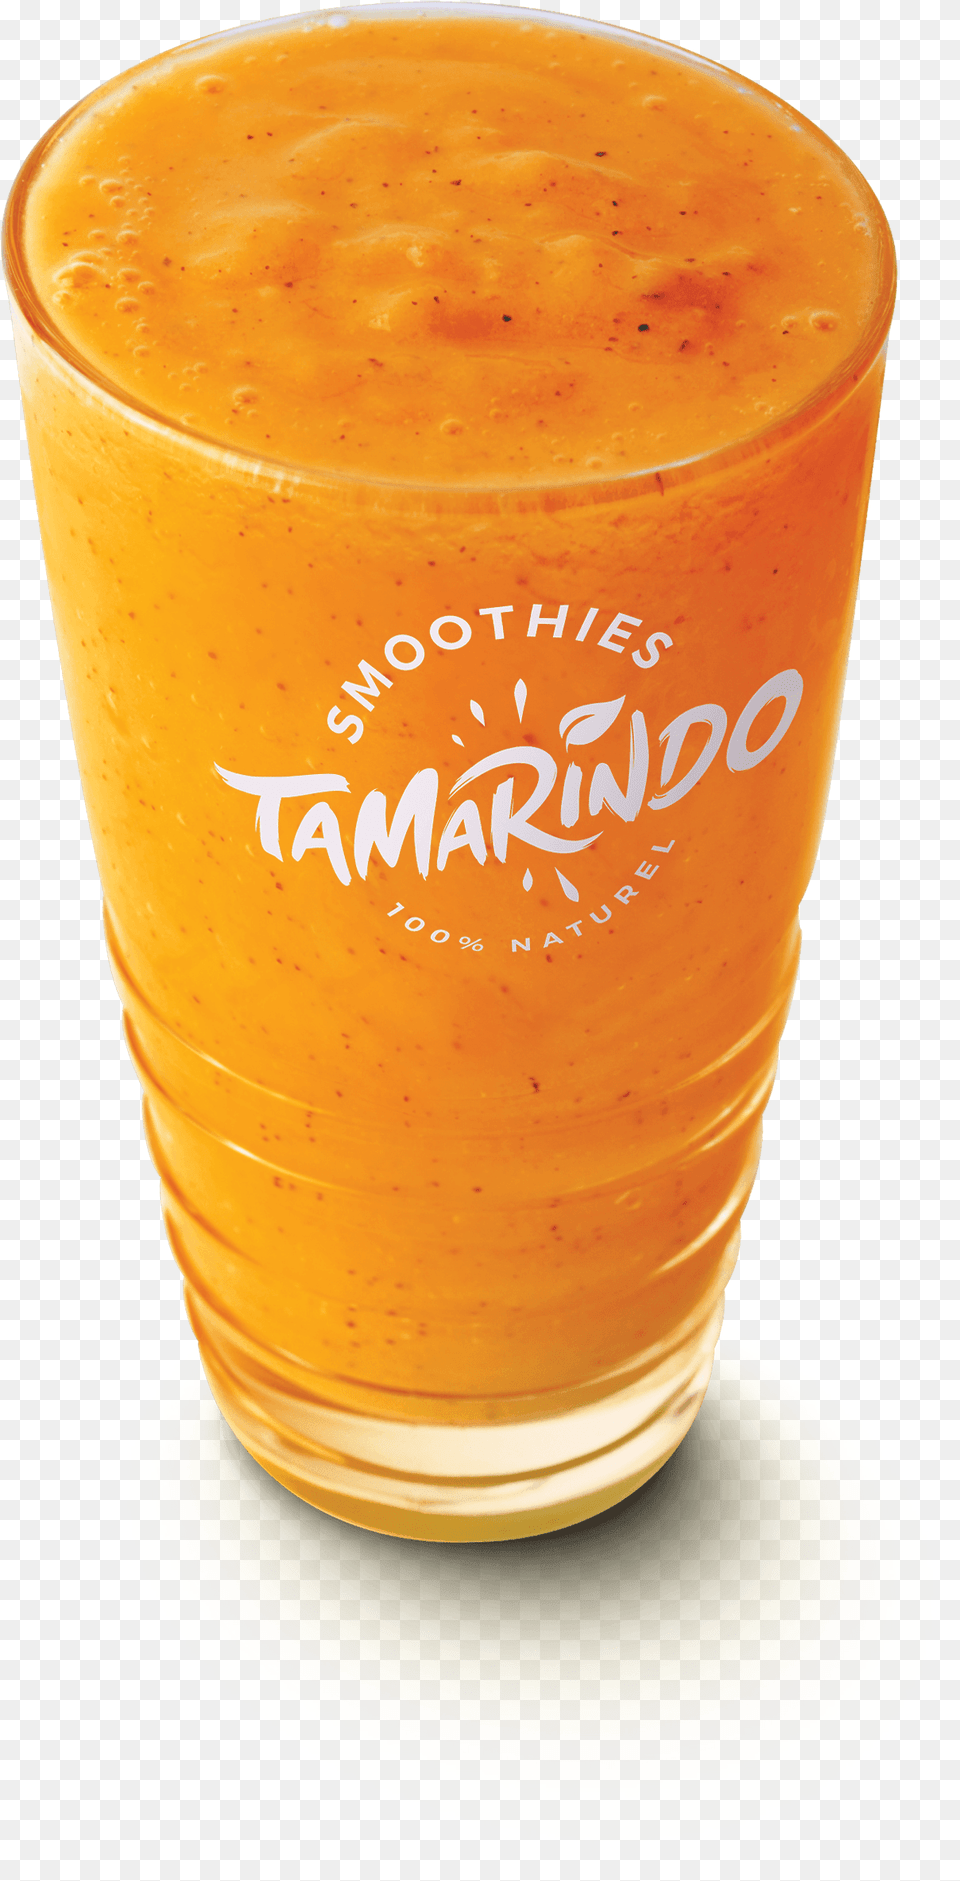 Smoothie Tamarindo Melon Pop Smoothie Tamarindo Melon Pop, Beverage, Juice, Glass, Can Png Image